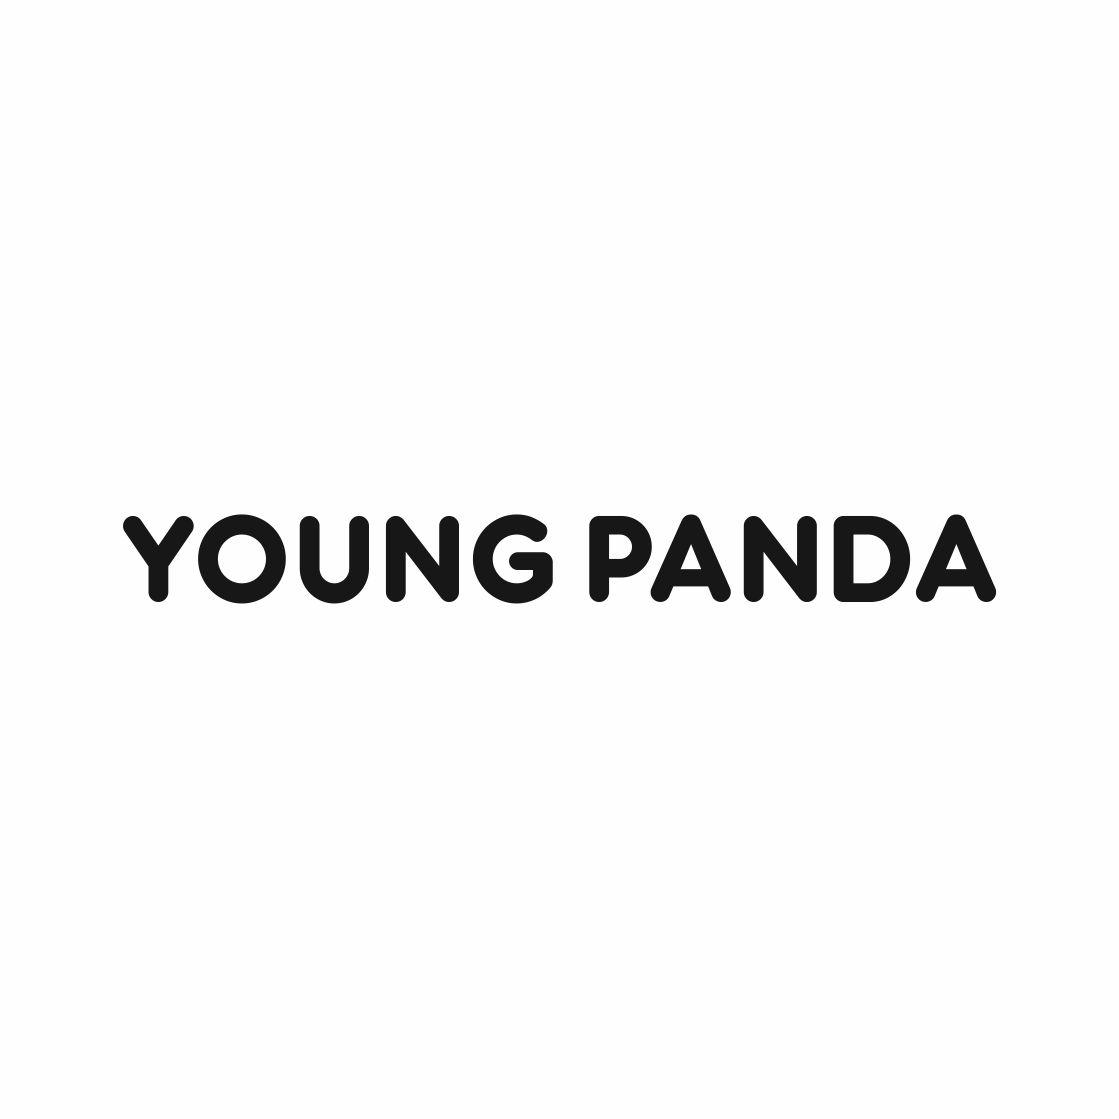 YOUNG PANDA